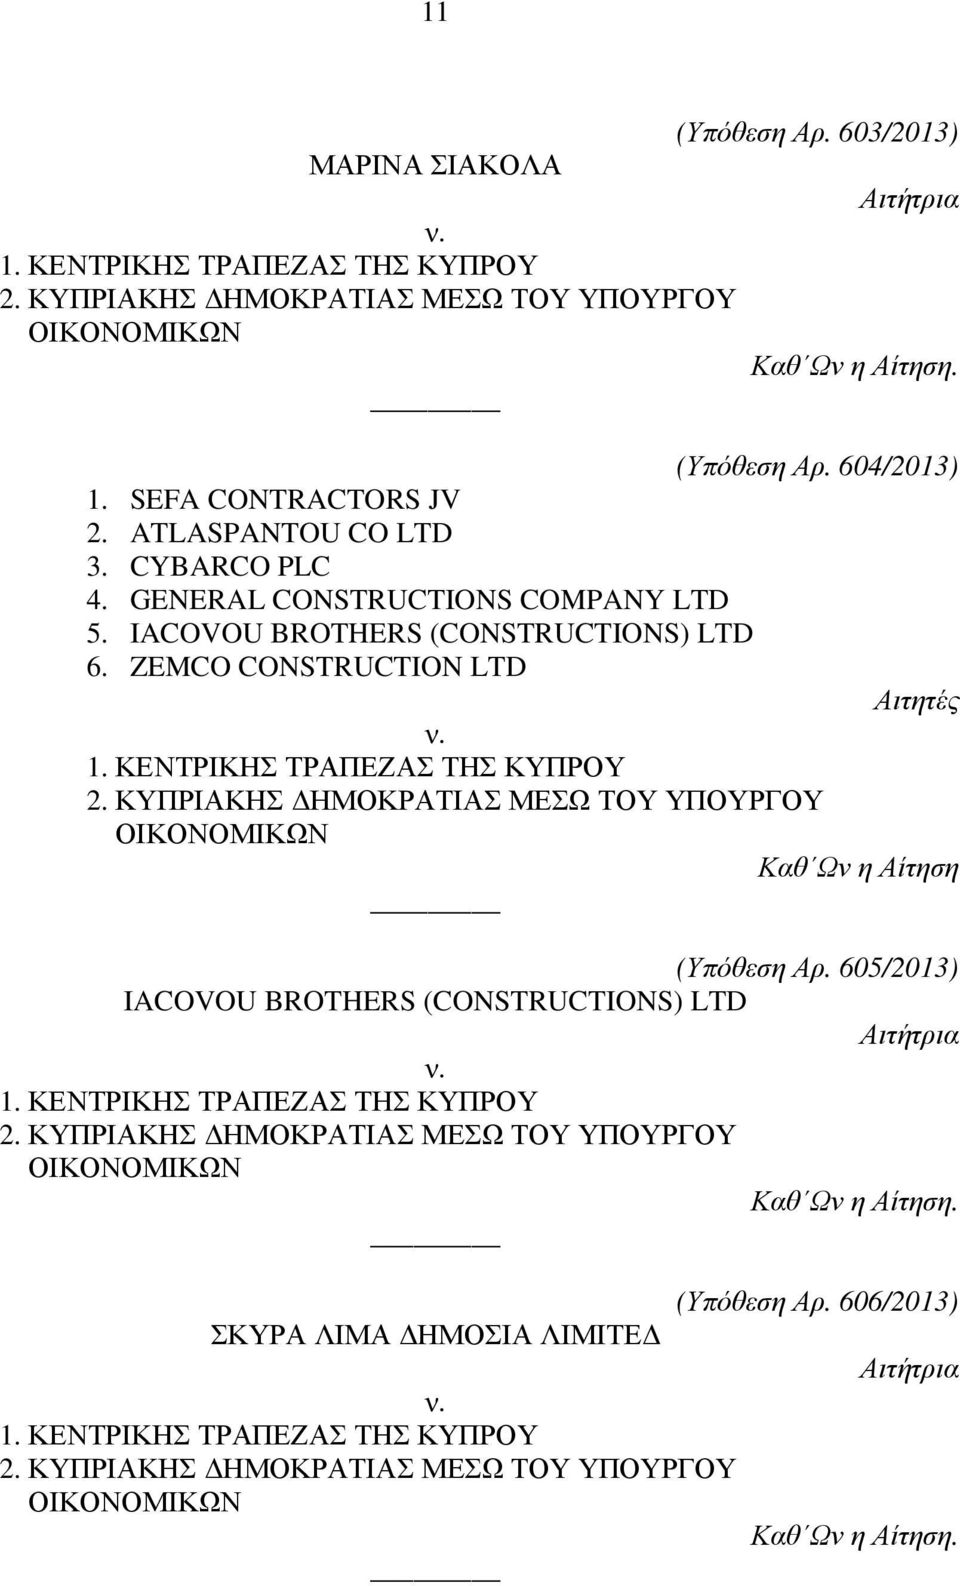 GENERAL CONSTRUCTIONS COMPANY LTD 5. IACOVOU BROTHERS (CONSTRUCTIONS) LTD 6.